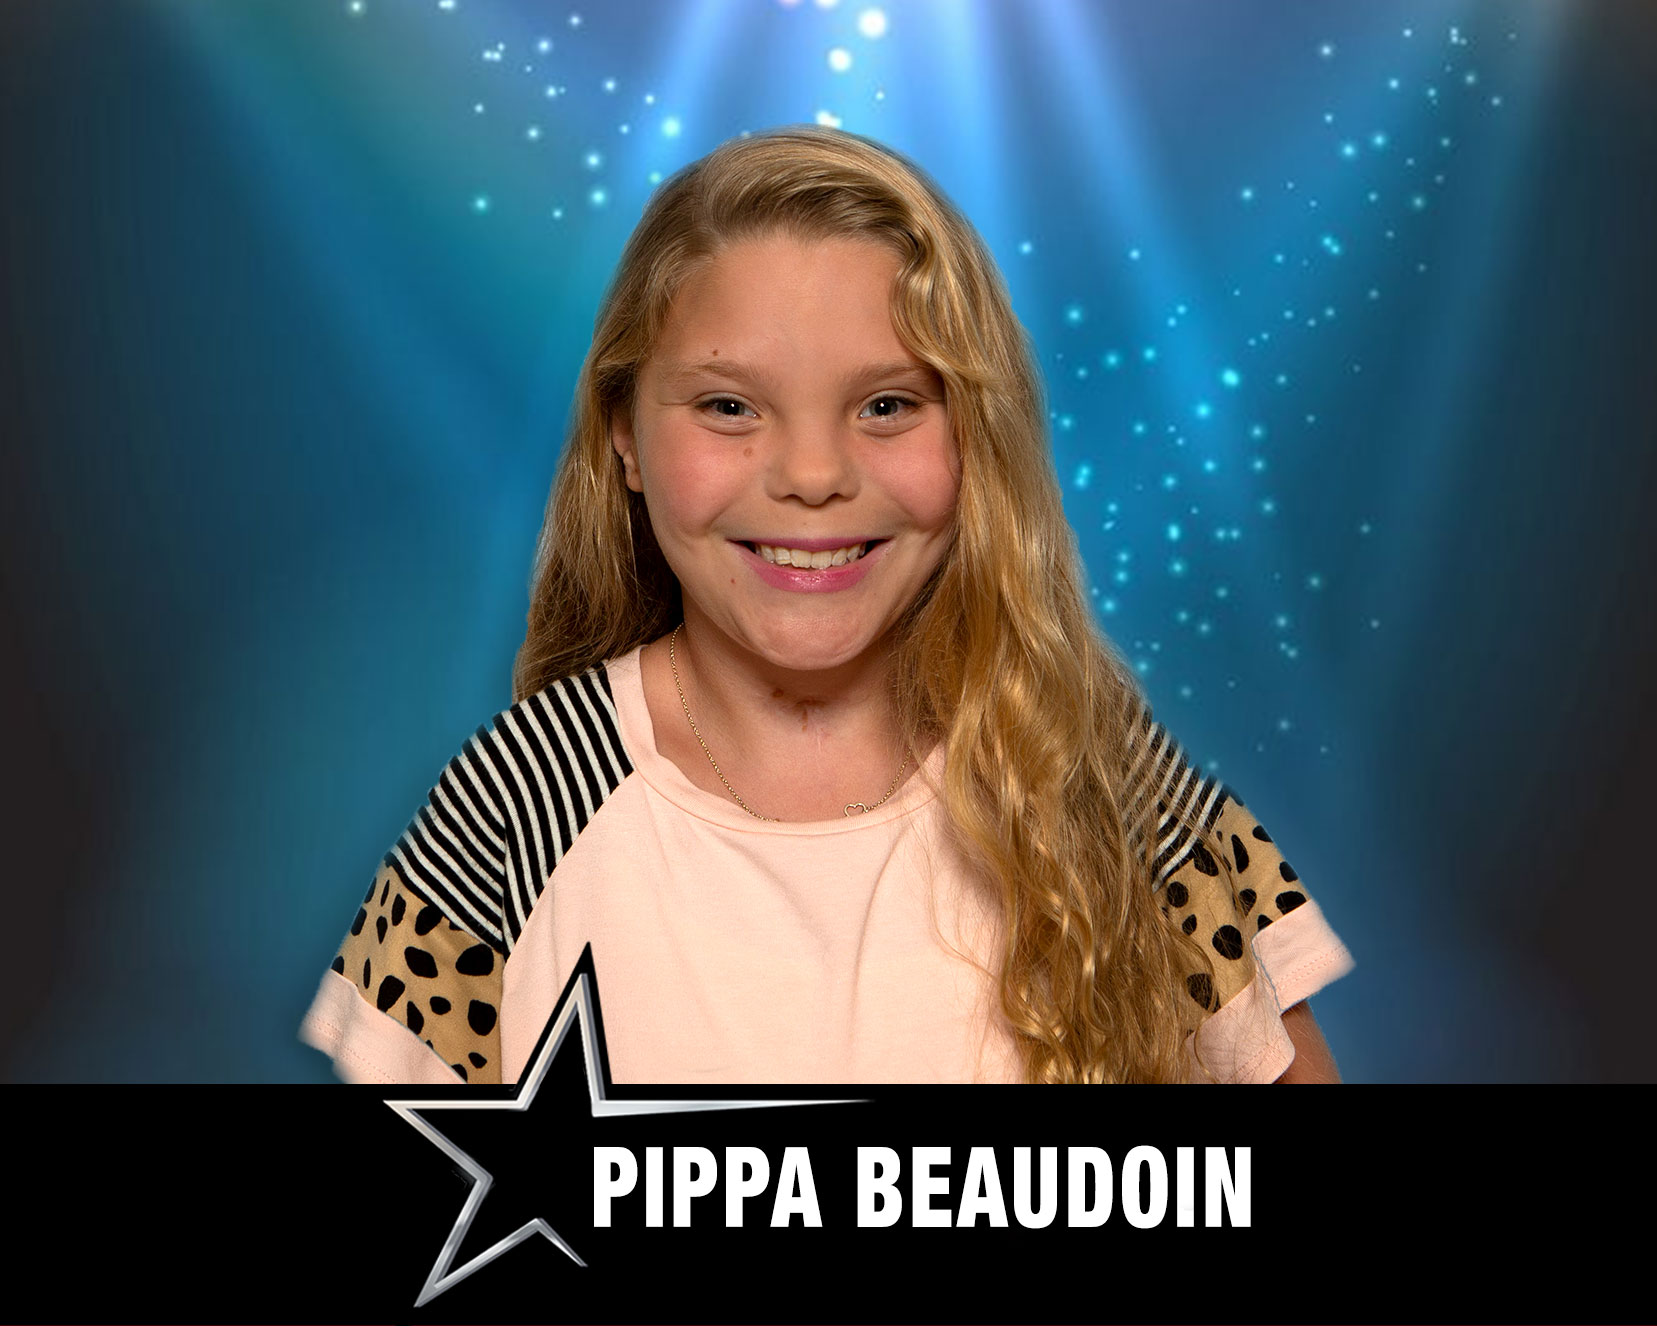 Pippa Beaudoin